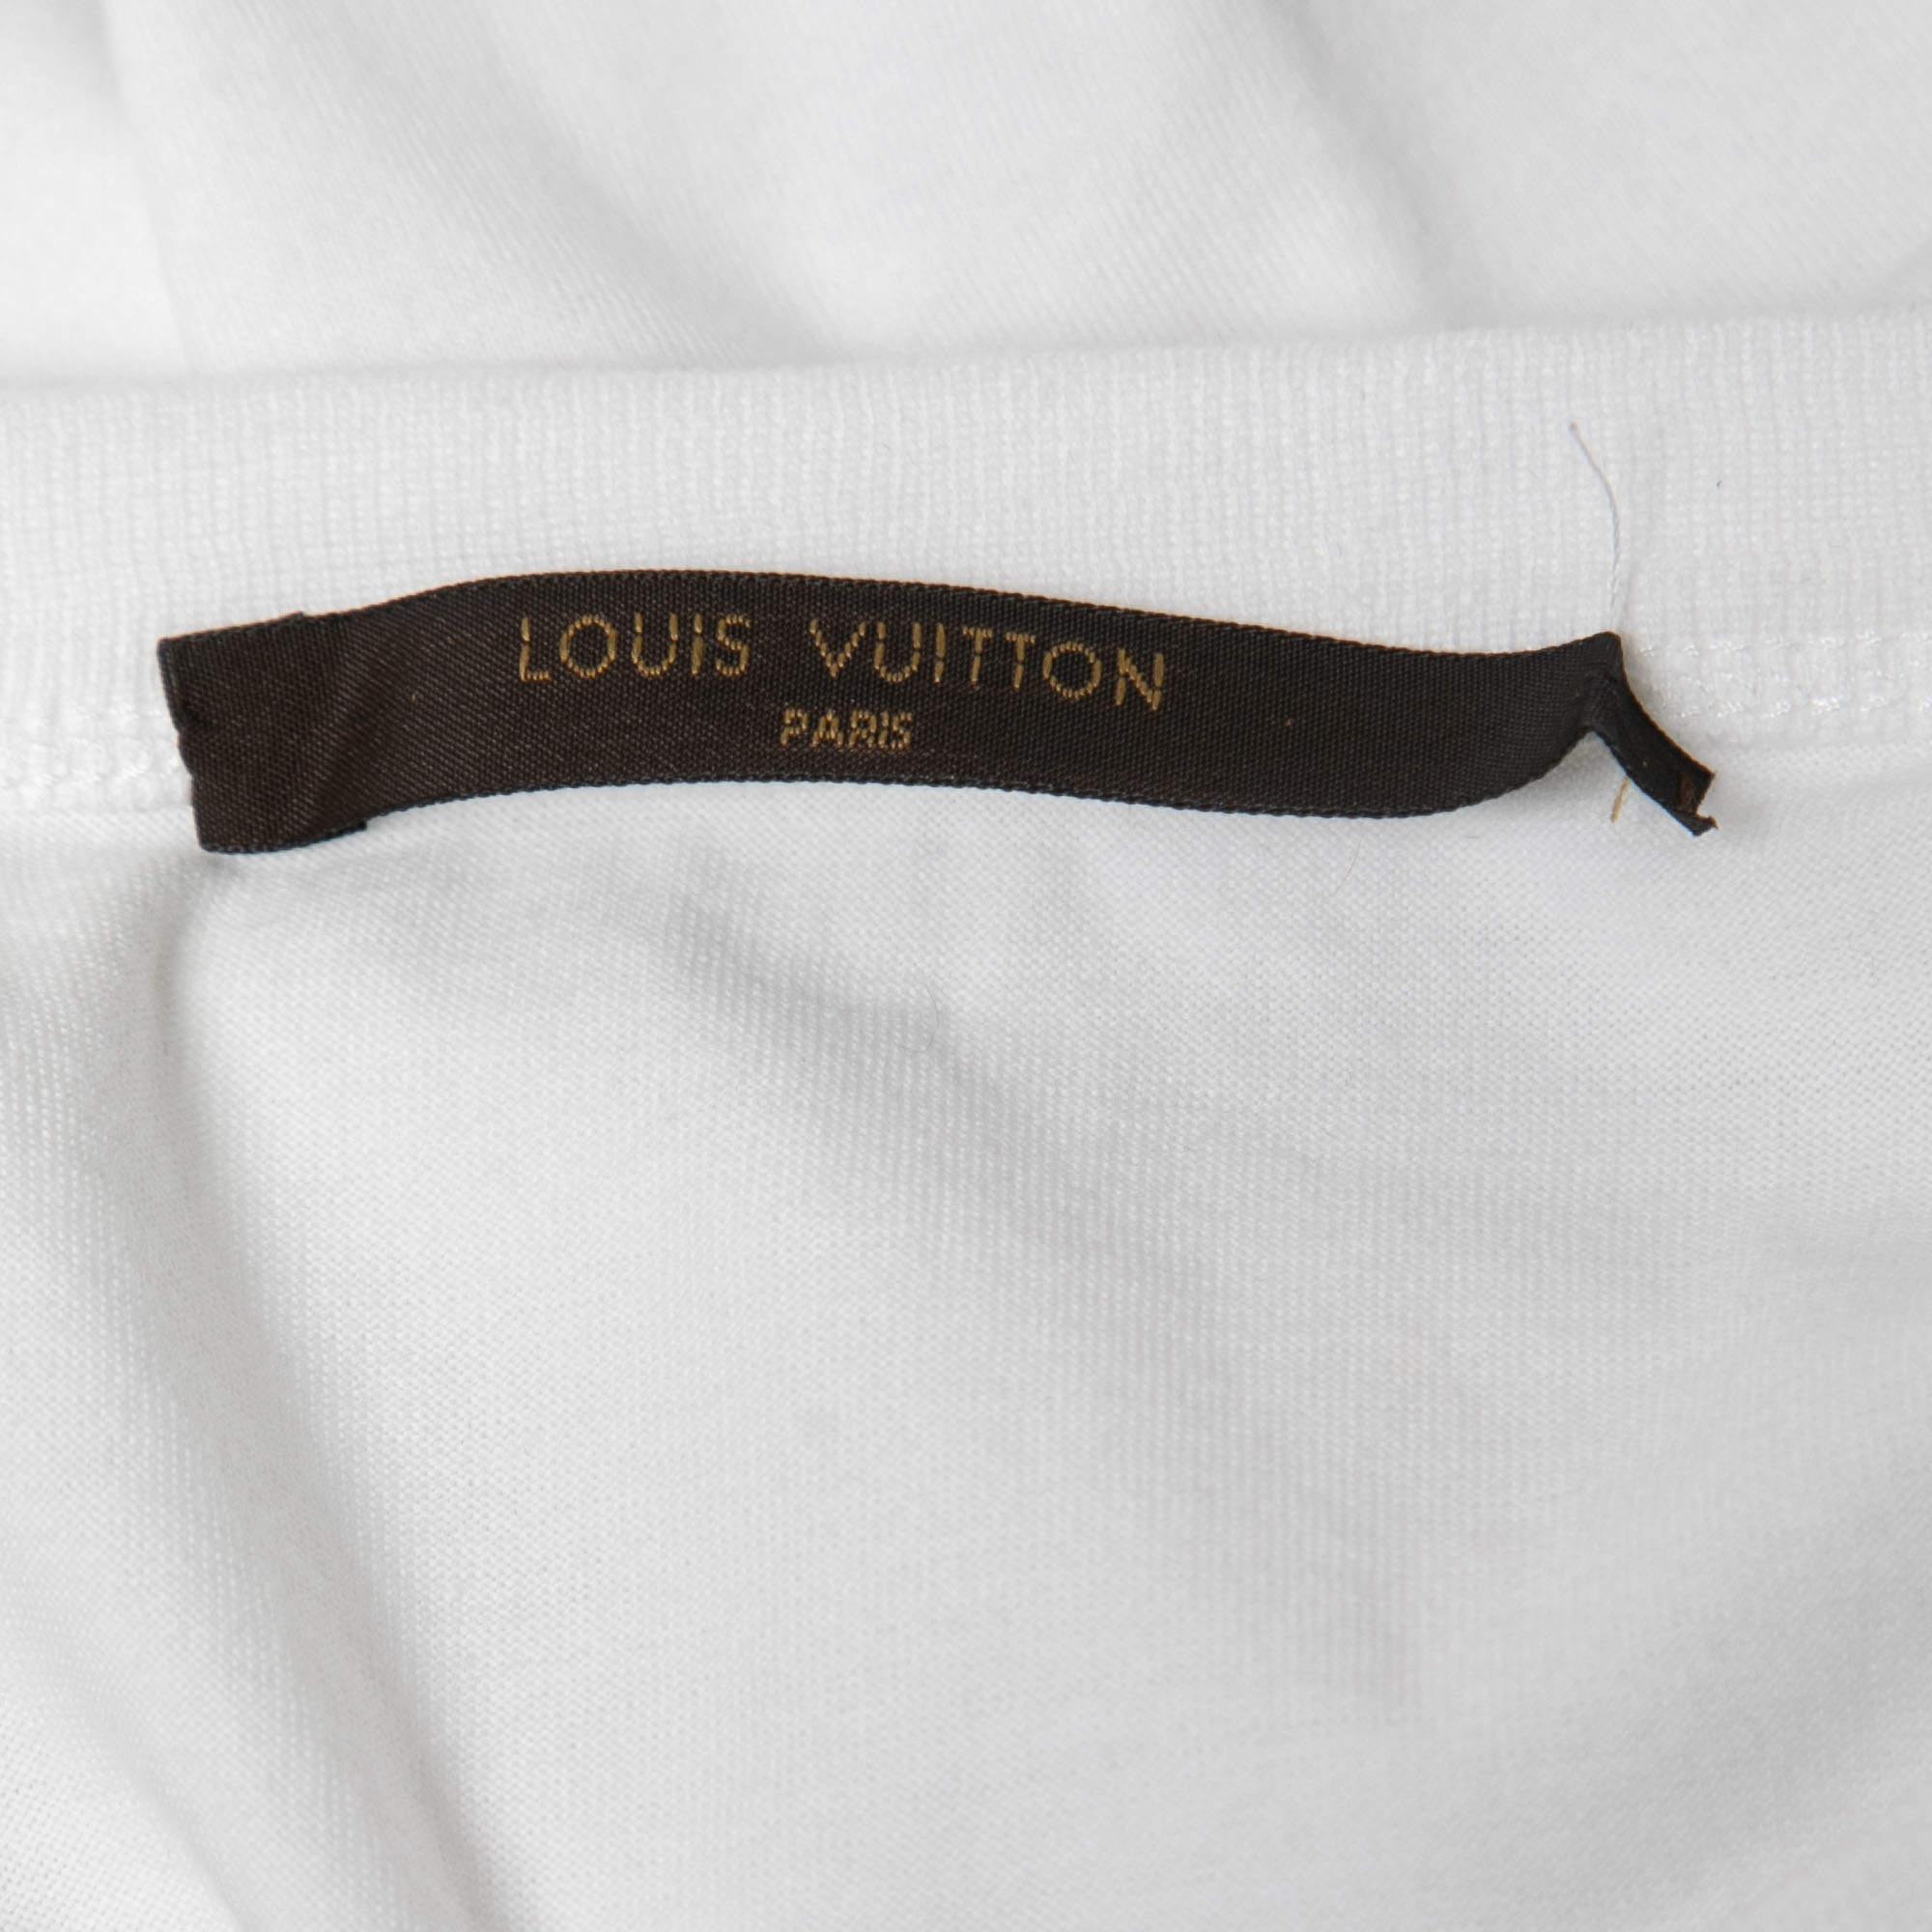 T-shirt Louis Vuitton x Supreme Red size L International in Cotton -  32500964